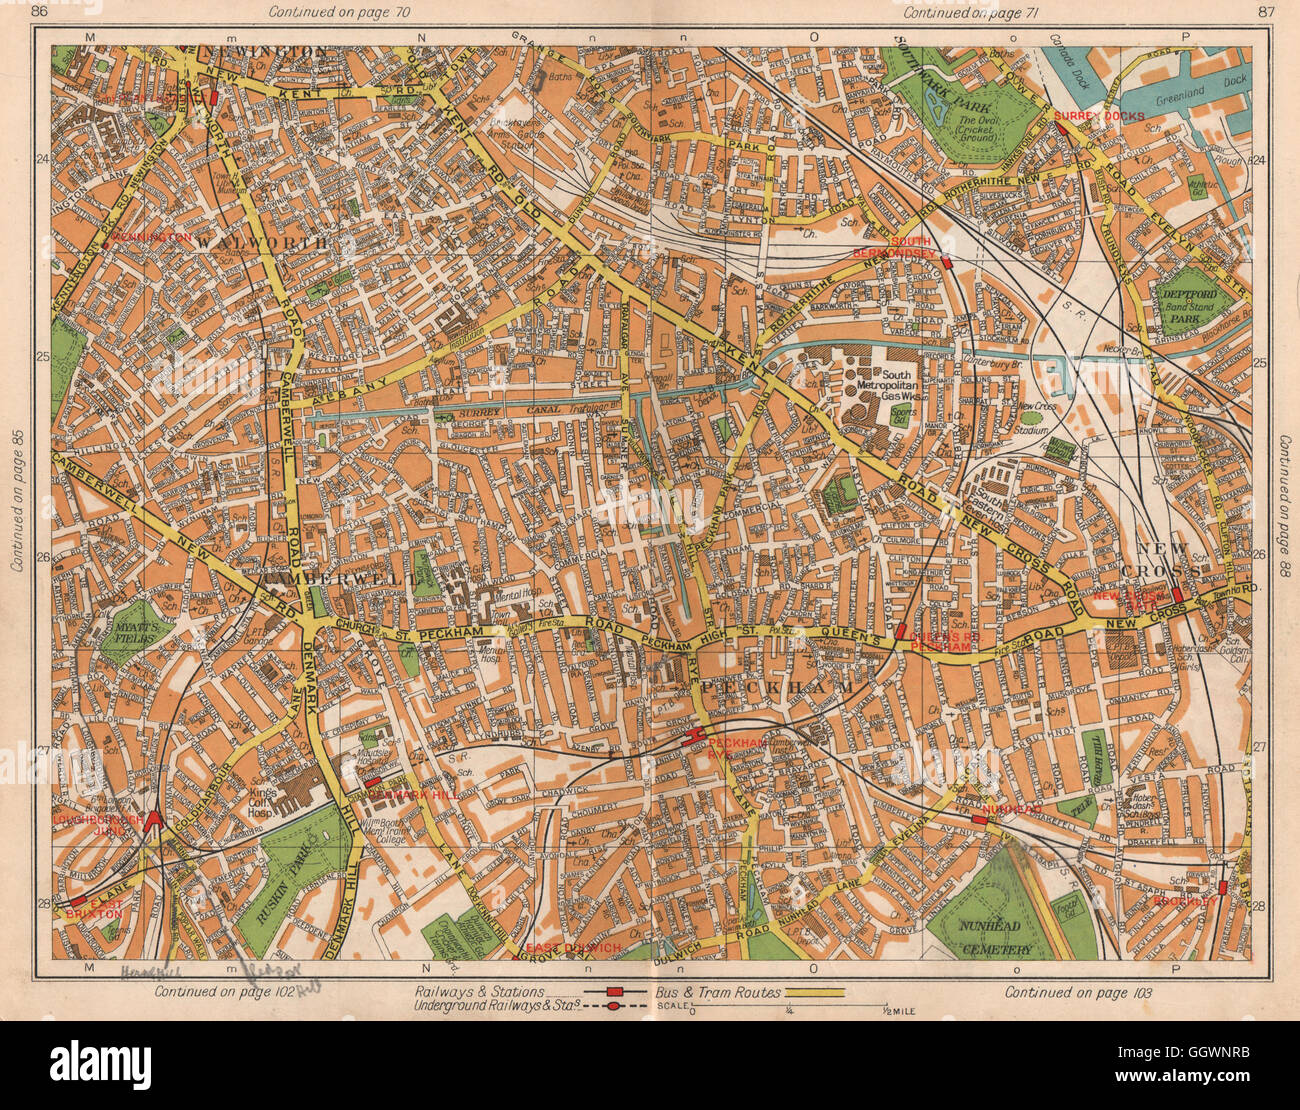 S LONDON. Walworth Camberwell Peckham Walworth Bermondsey Denmark Hill, 1938 map Stock Photo